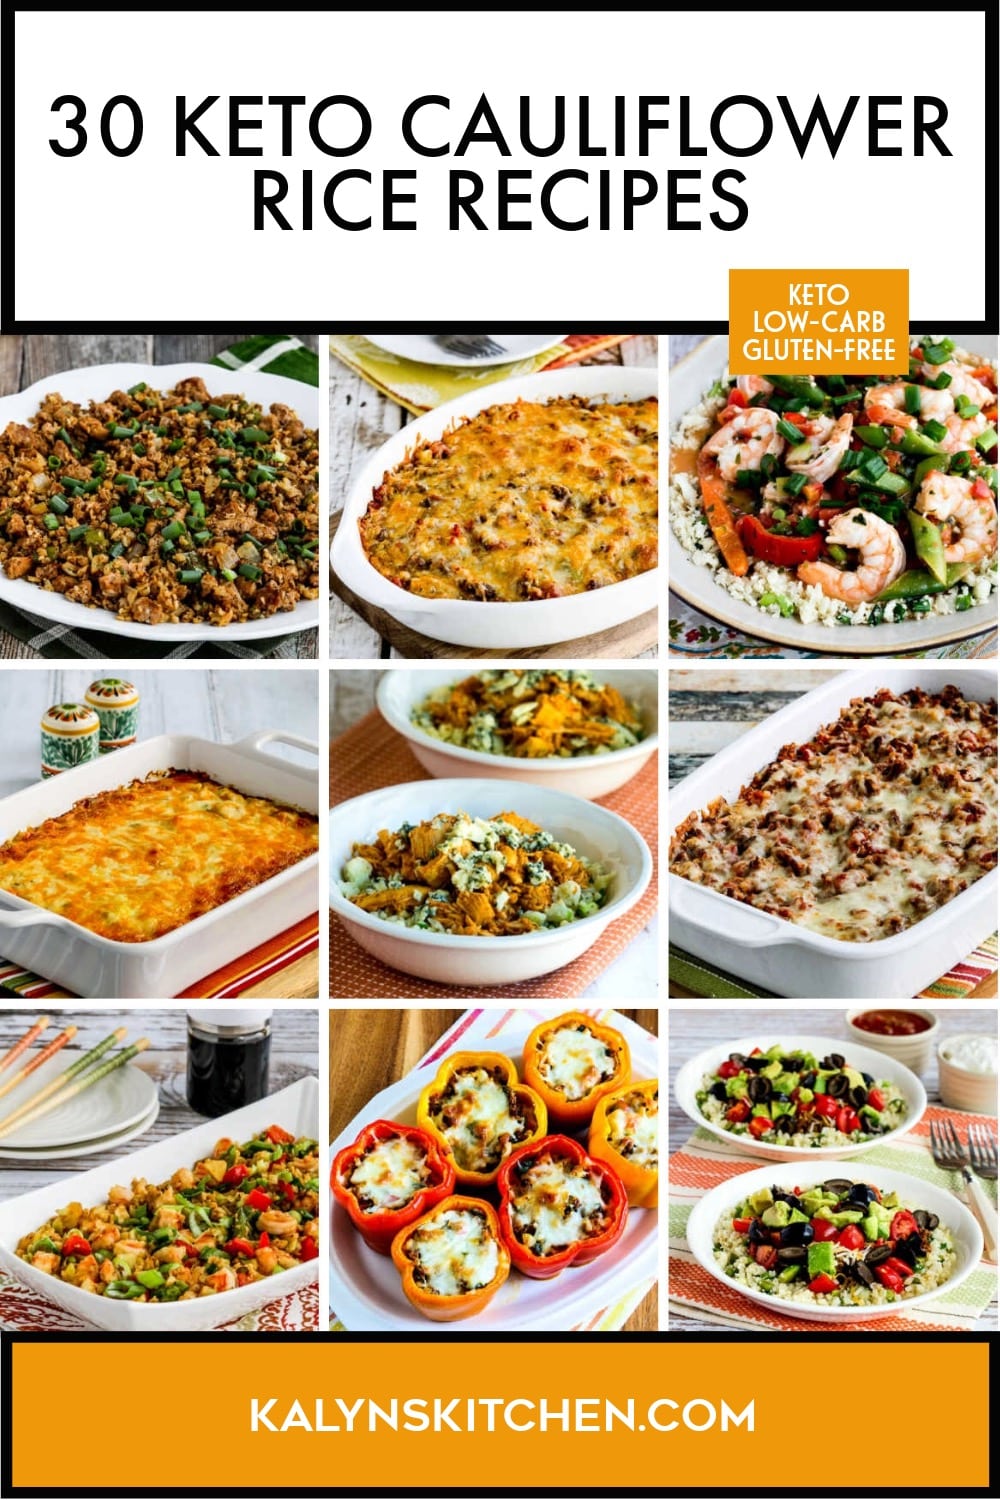 Pinterest image of 30 Keto Cauliflower Rice Recipes